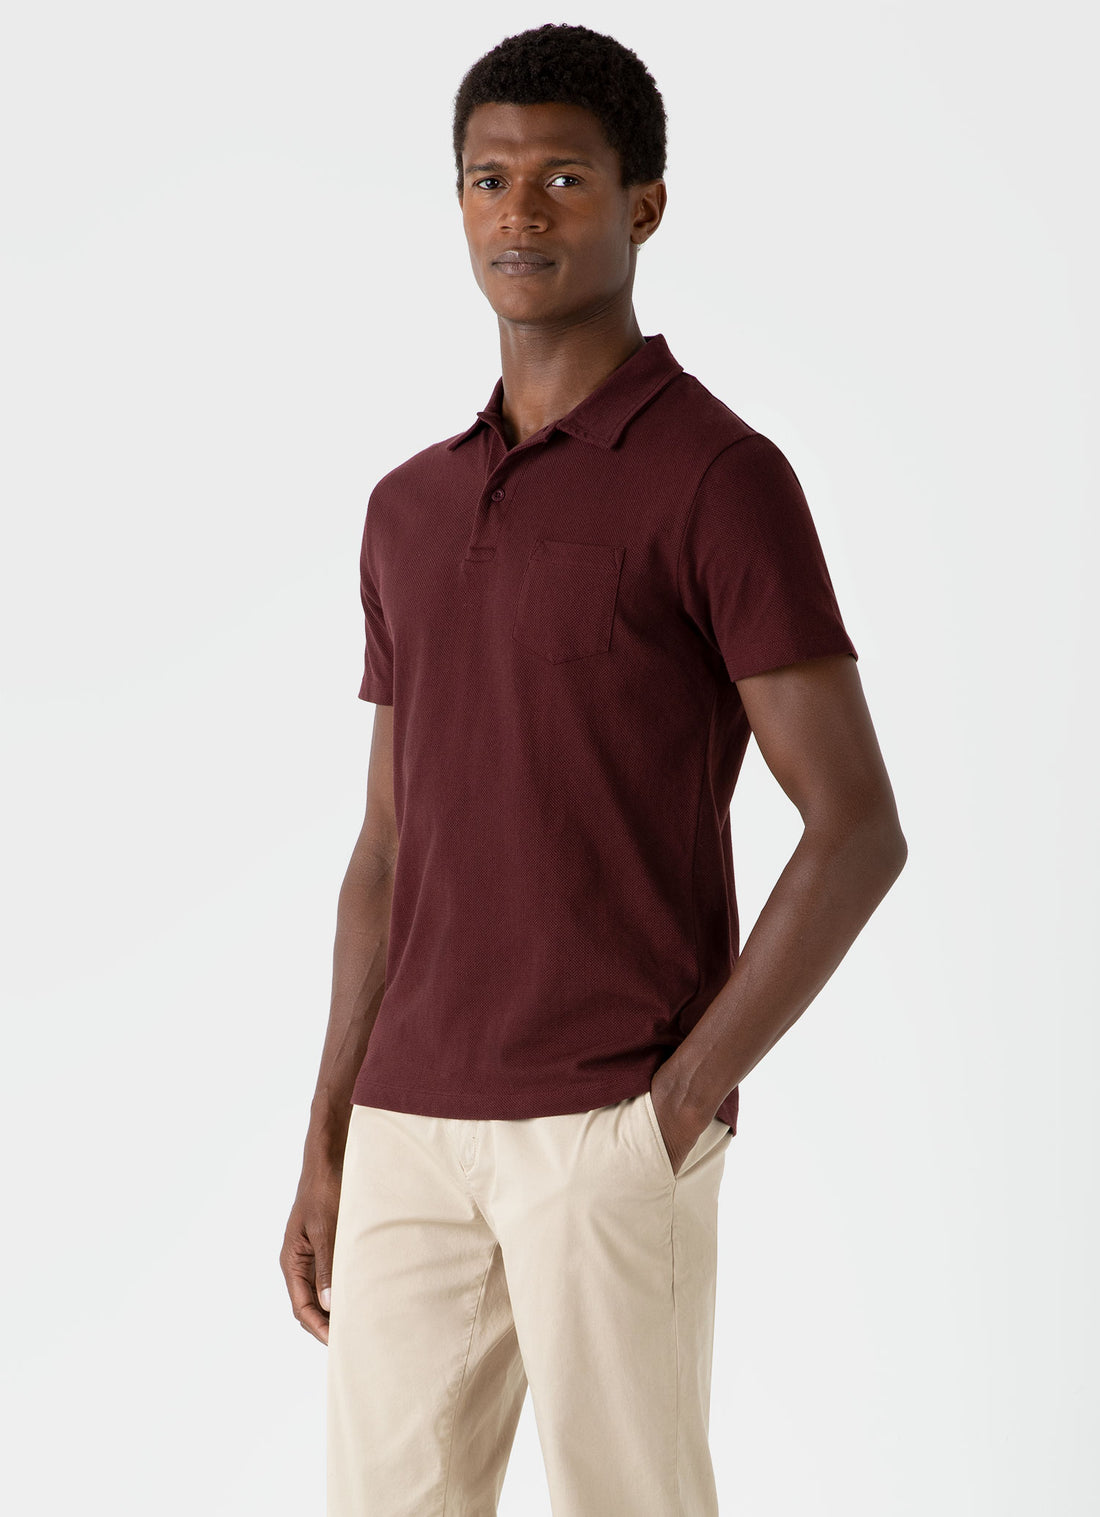 Men’s Sale Polo Shirts | Sunspel